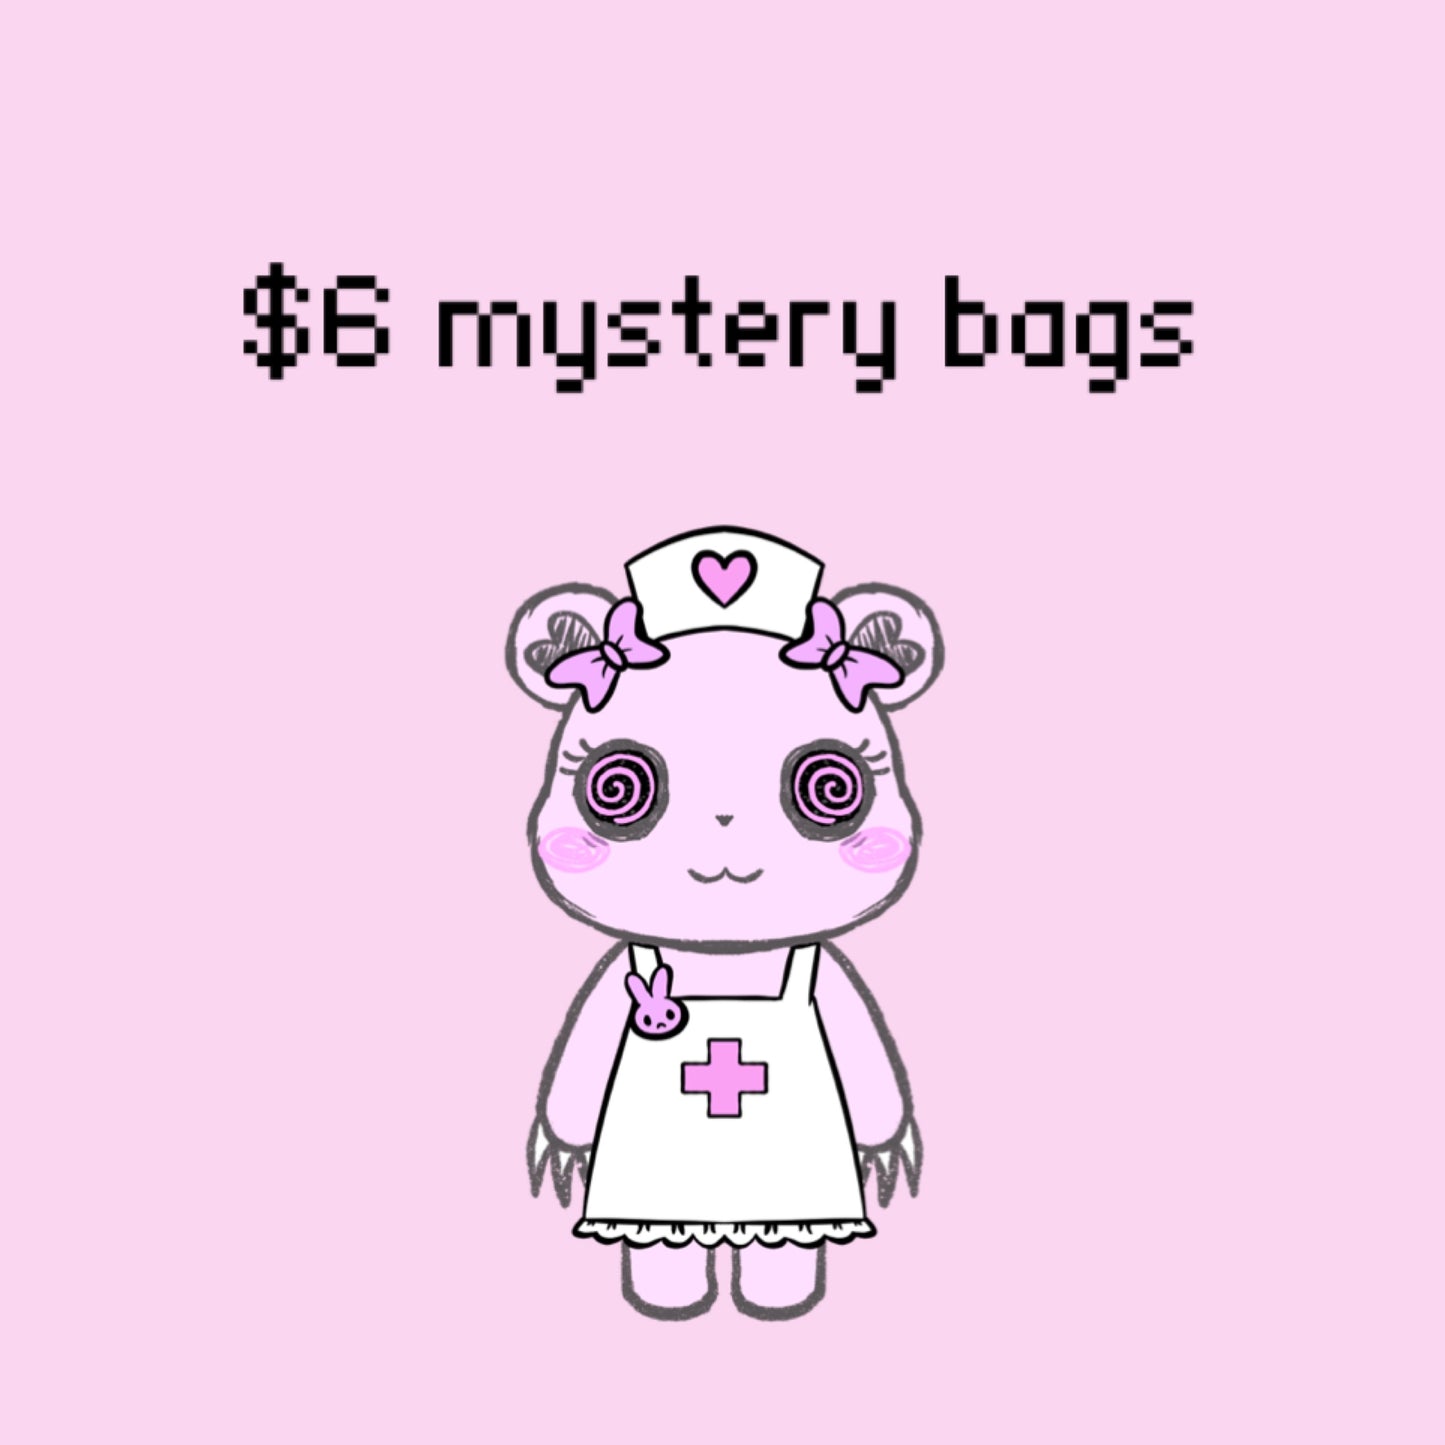 $6 mystery bag